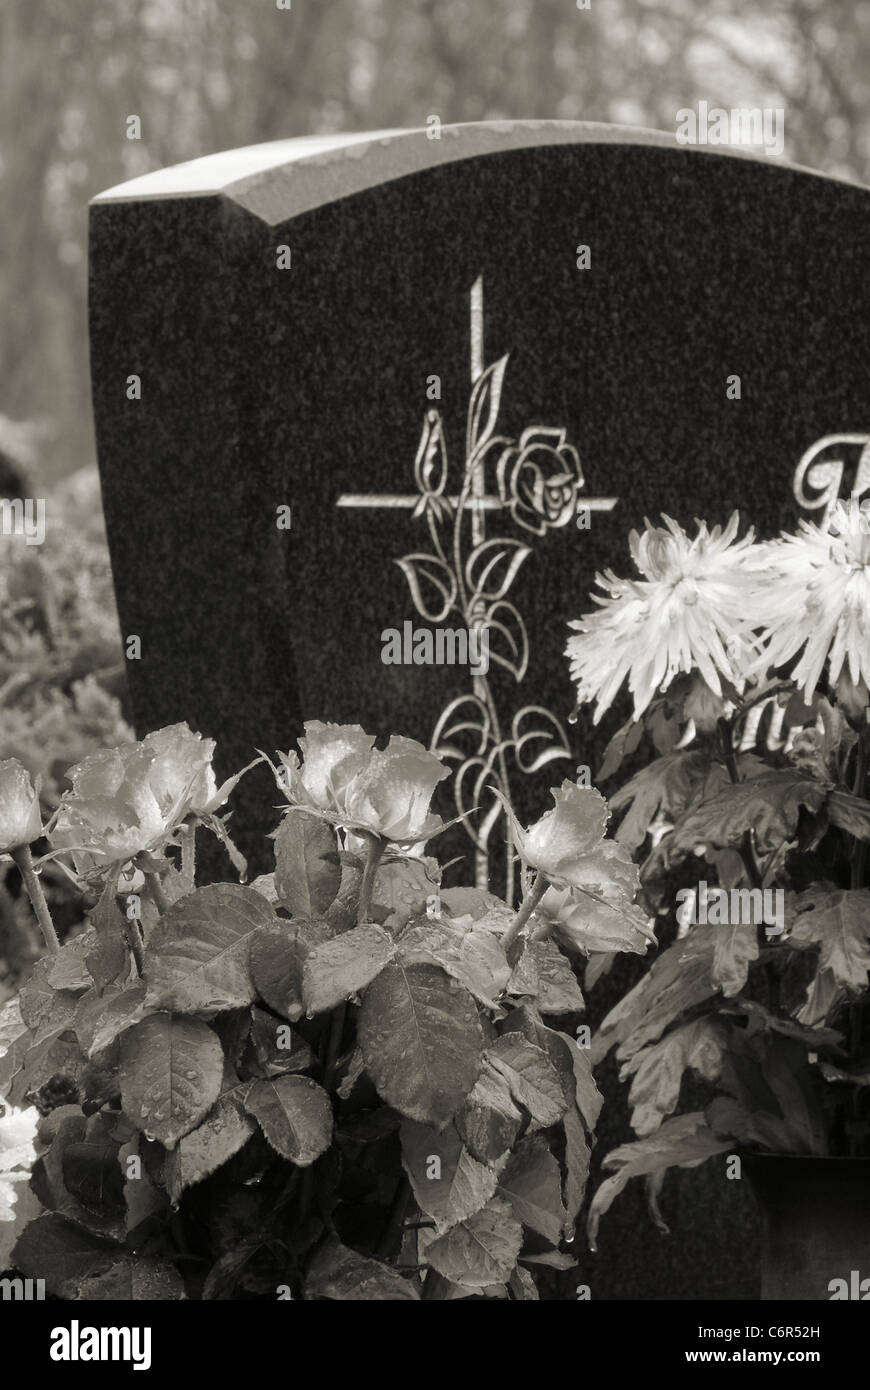 - Arreglo floral cementerio Friedhofsgesteck 34 Foto de stock